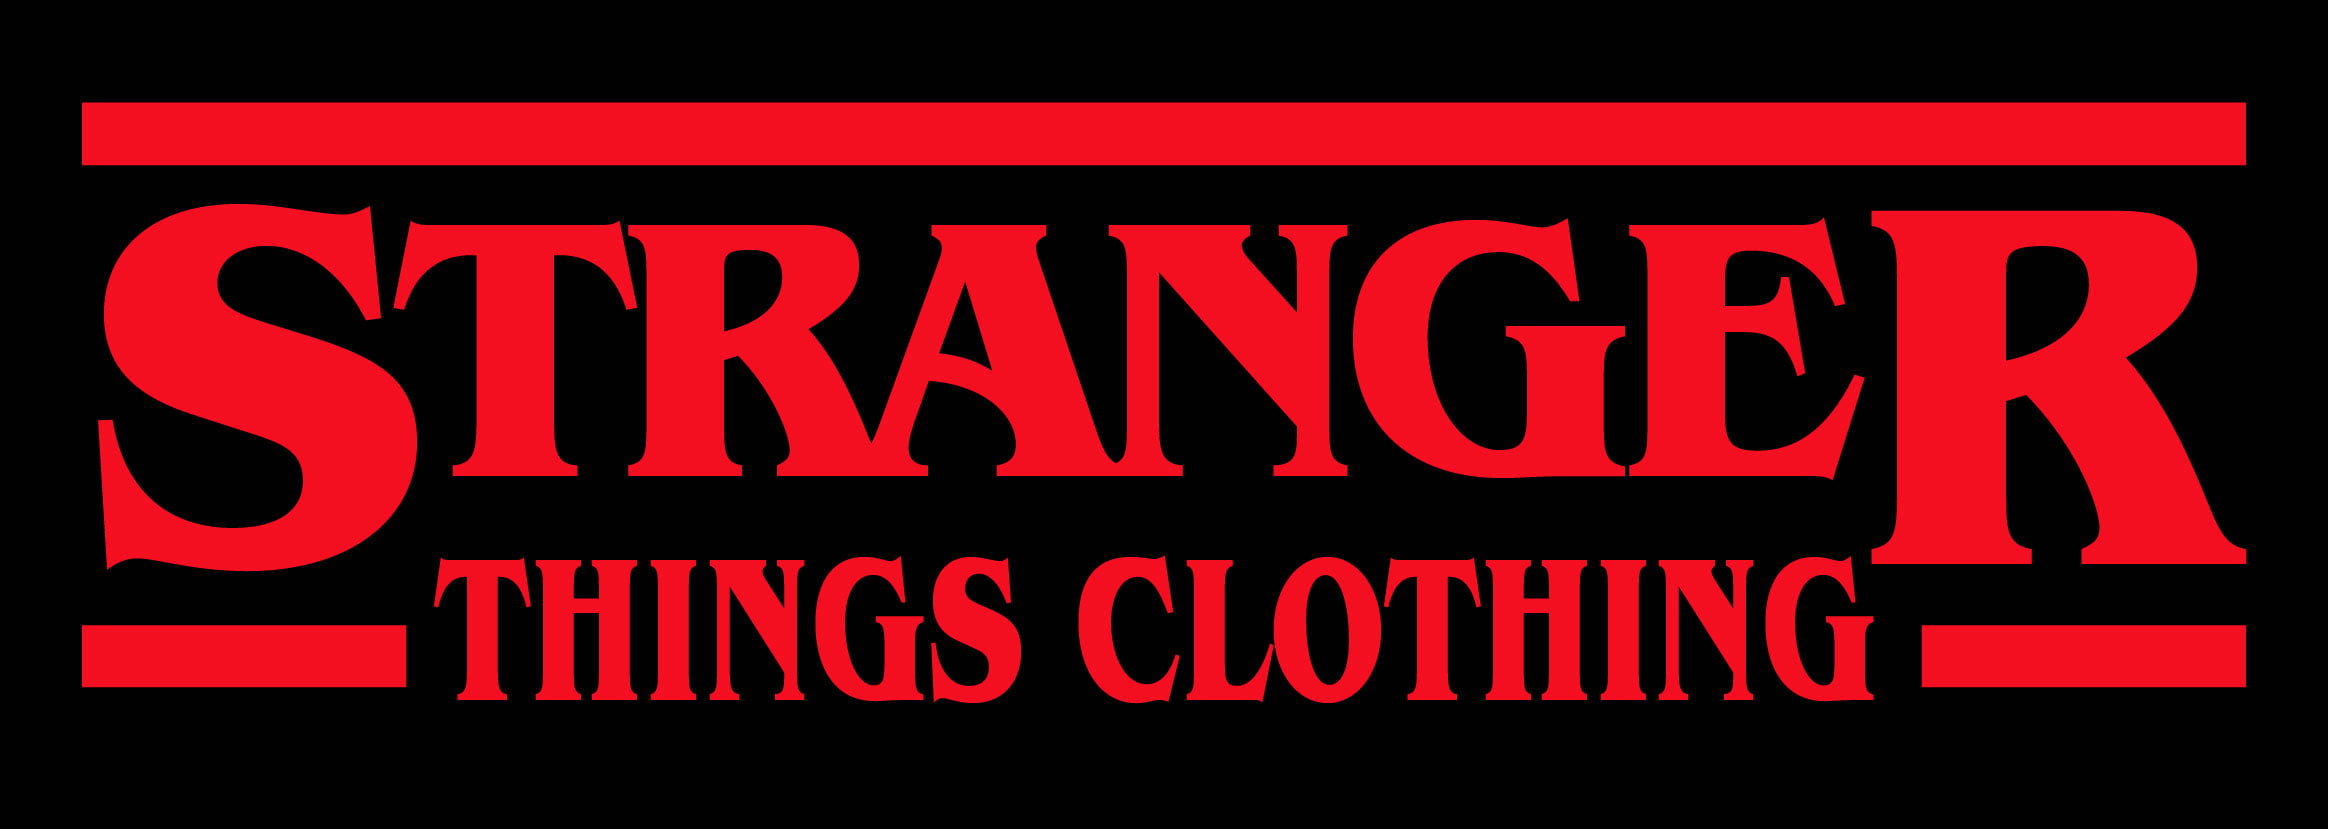 Stranger Things Clothing